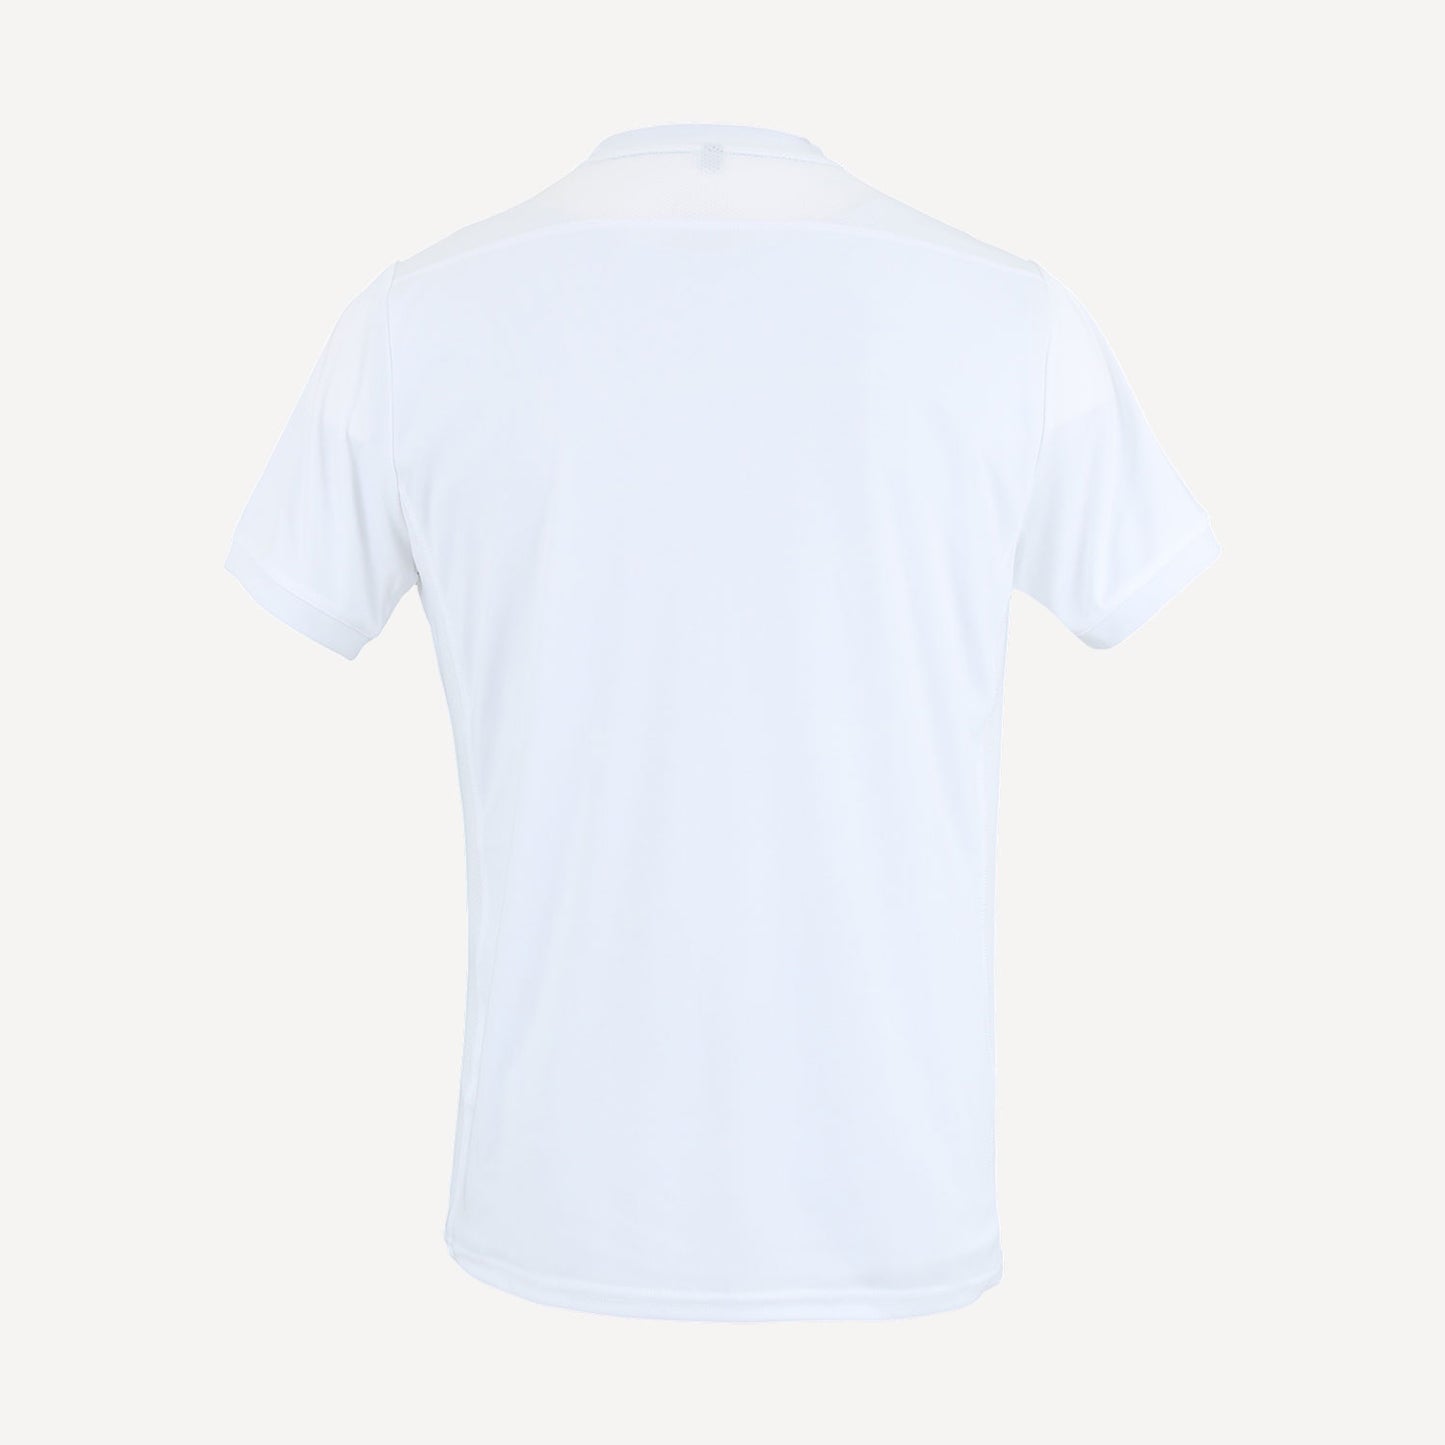 The Indian Maharadja Kadiri Men's Tennis Shirt - TV Victoria White (2)